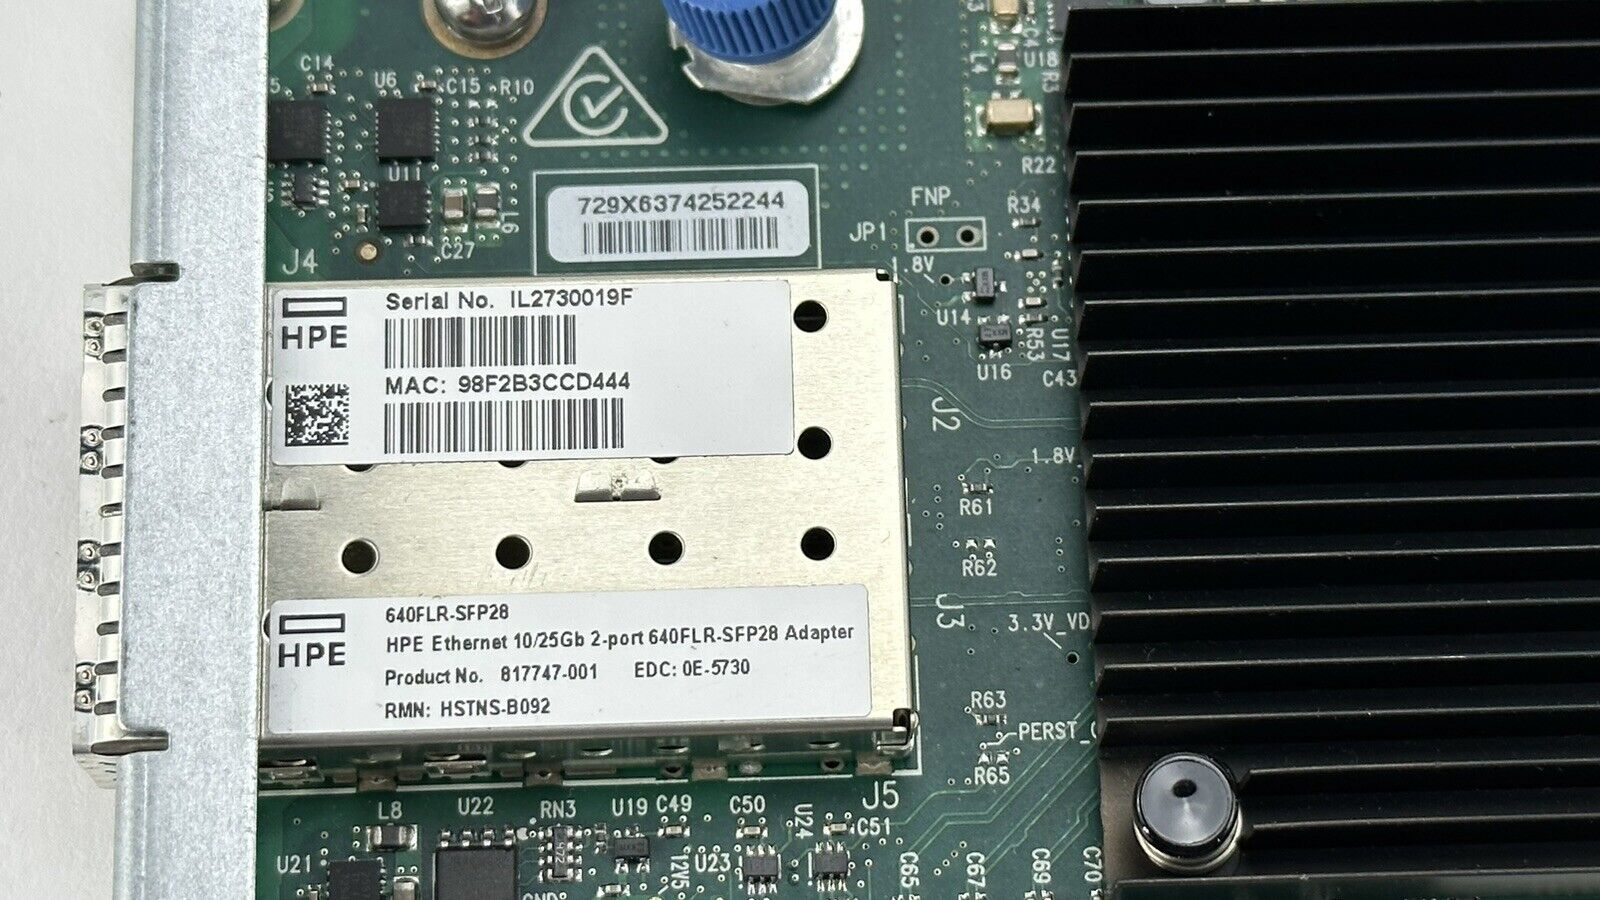 HPE 640FLR-SFP28 Ethernet 10/25Gb 2-port SFP FLR NIC Adapter G8 G9 Gen10